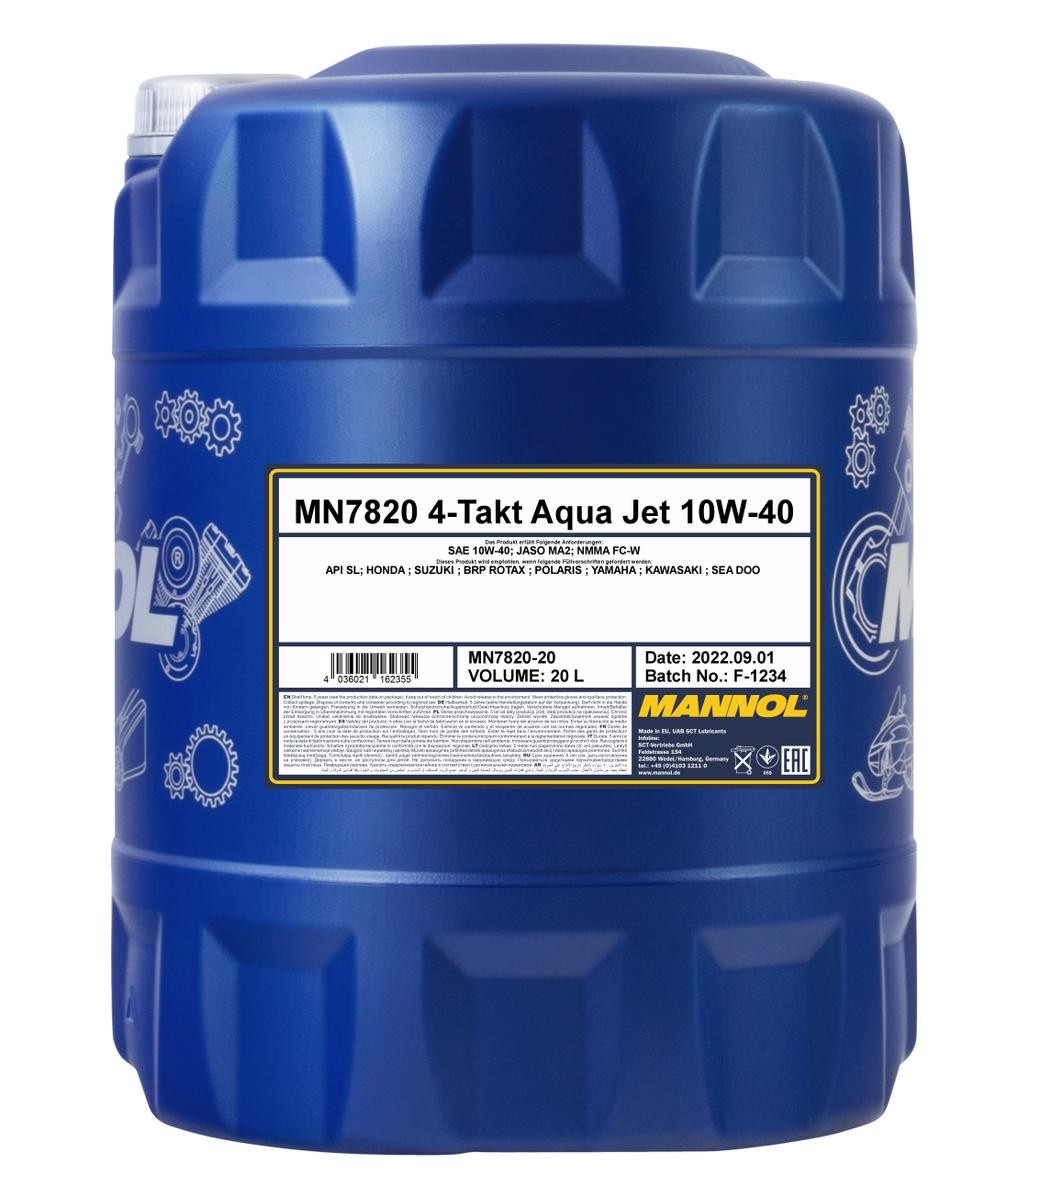 MANNOL AQUA JET, 4-Takt 10W-40, 20l, Part Synthetic Oil Motor oil MN7820-20 buy